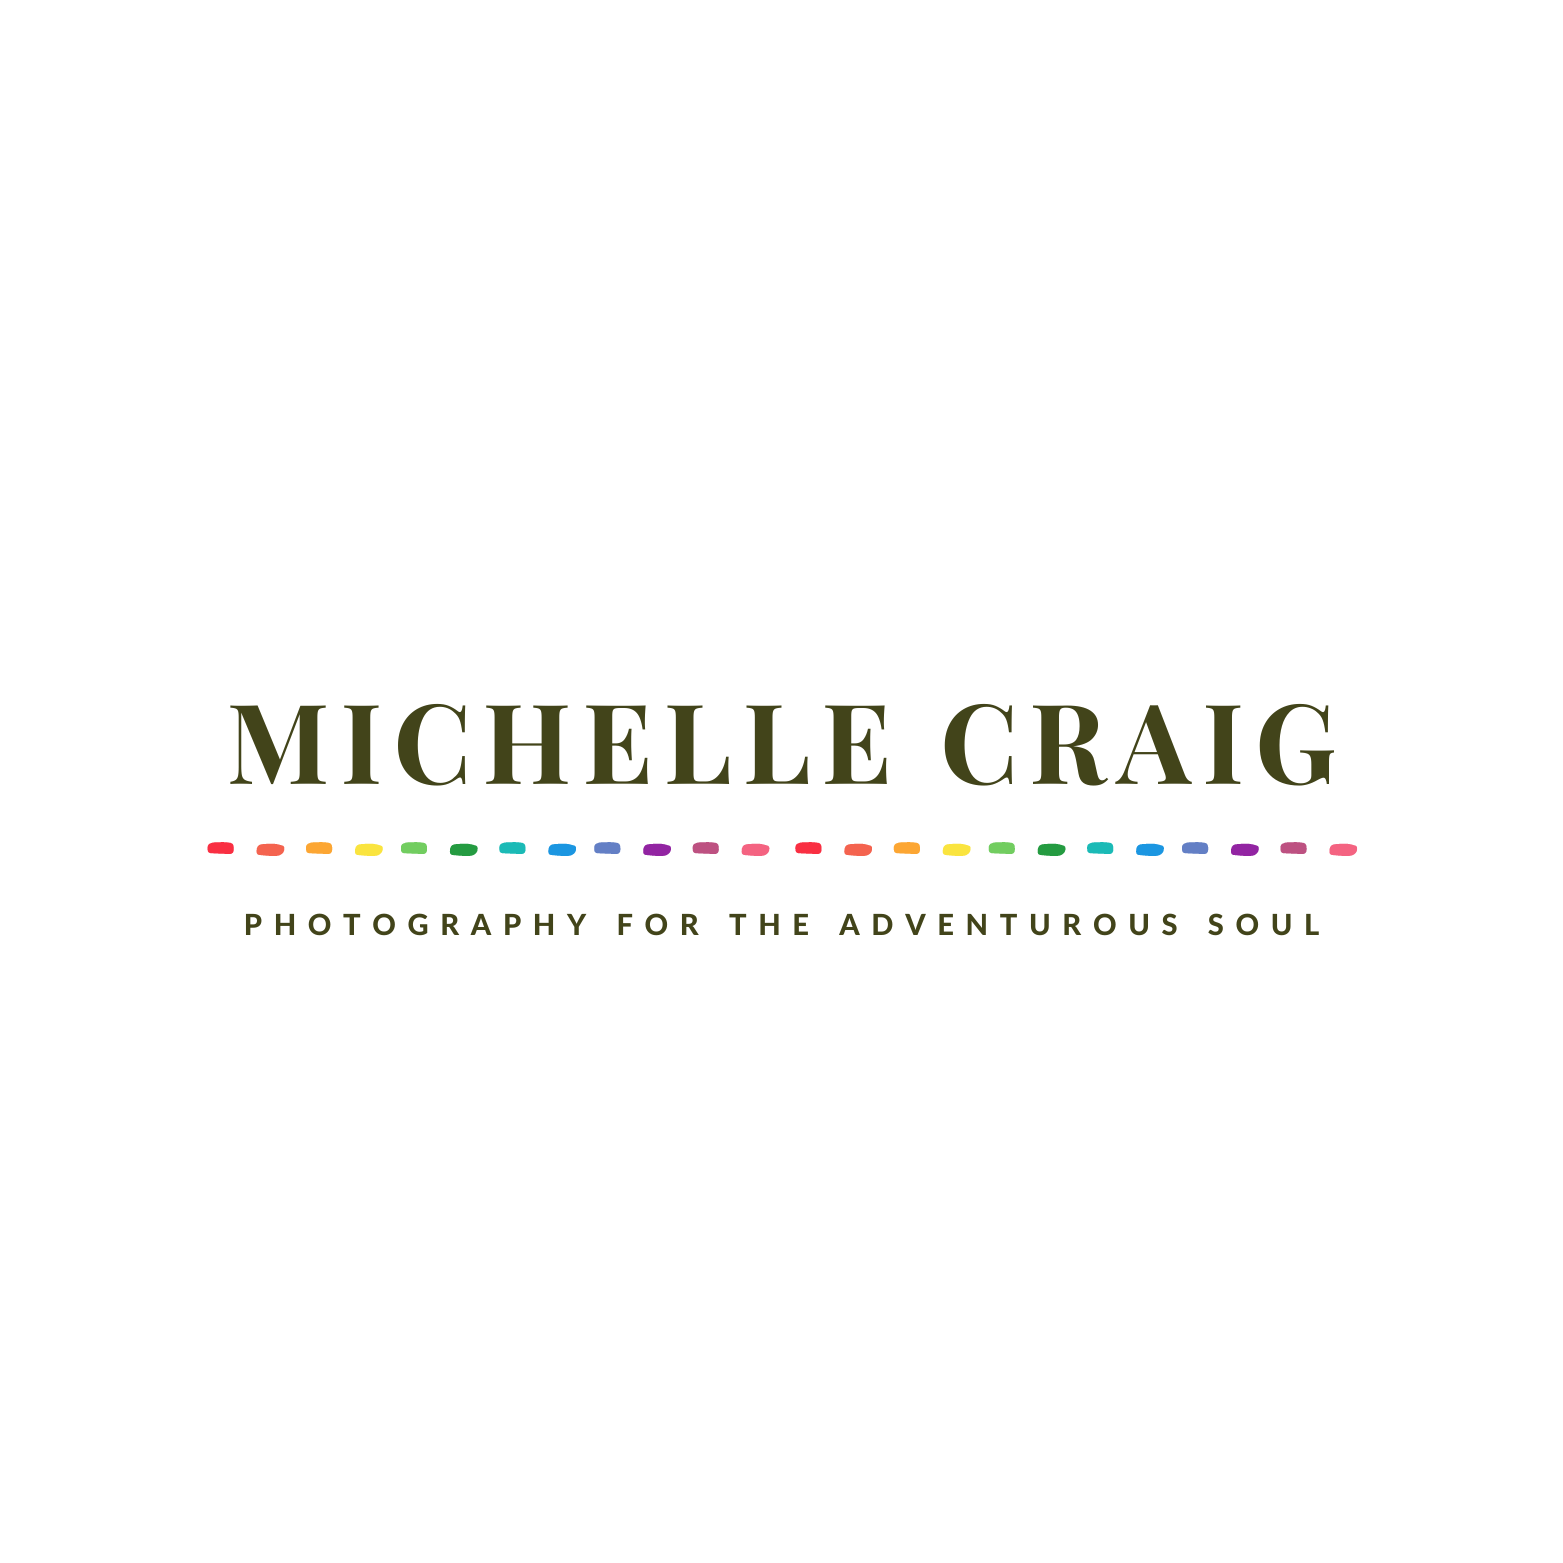 MICHELLE CRAIG PHOTOGRAPHY